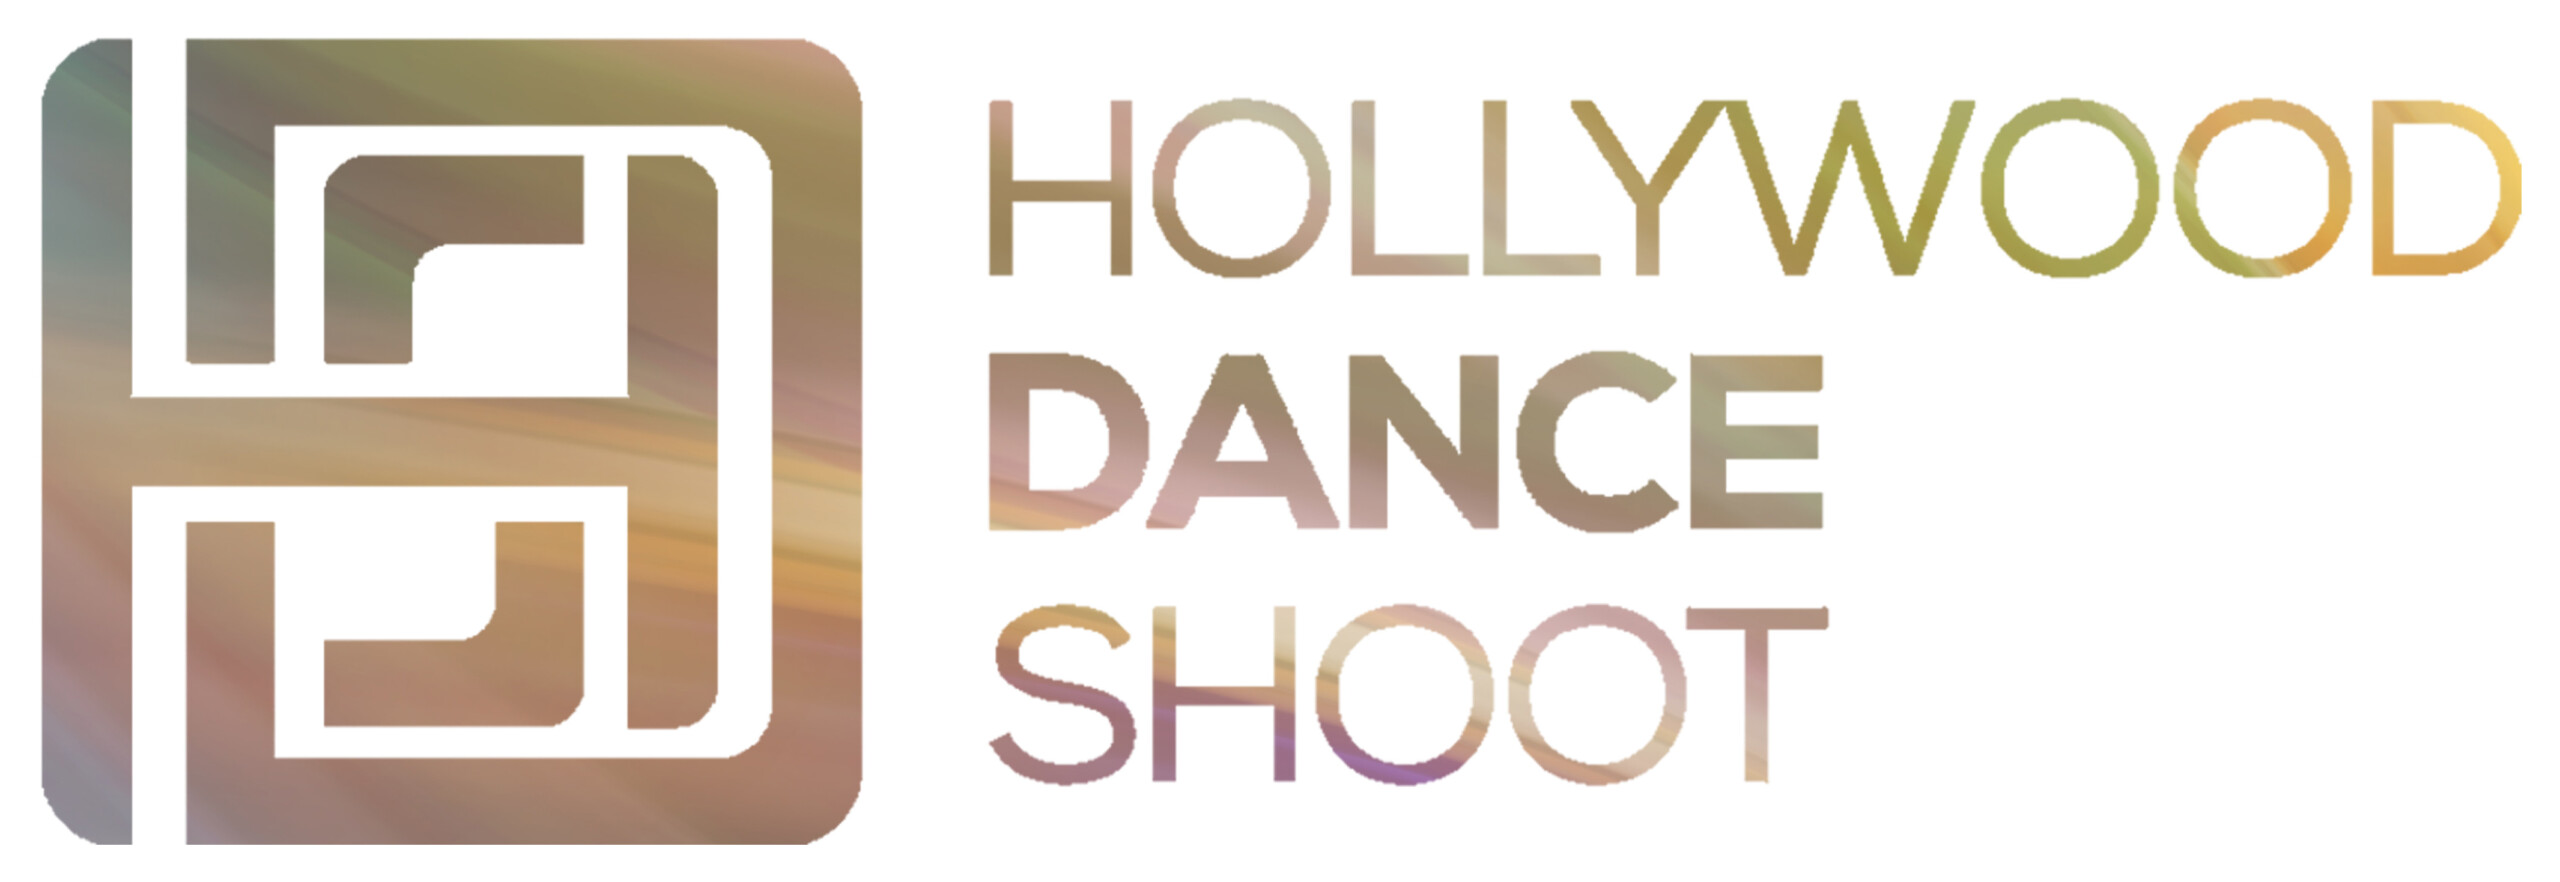 Hollywood Dance Shoot Logo